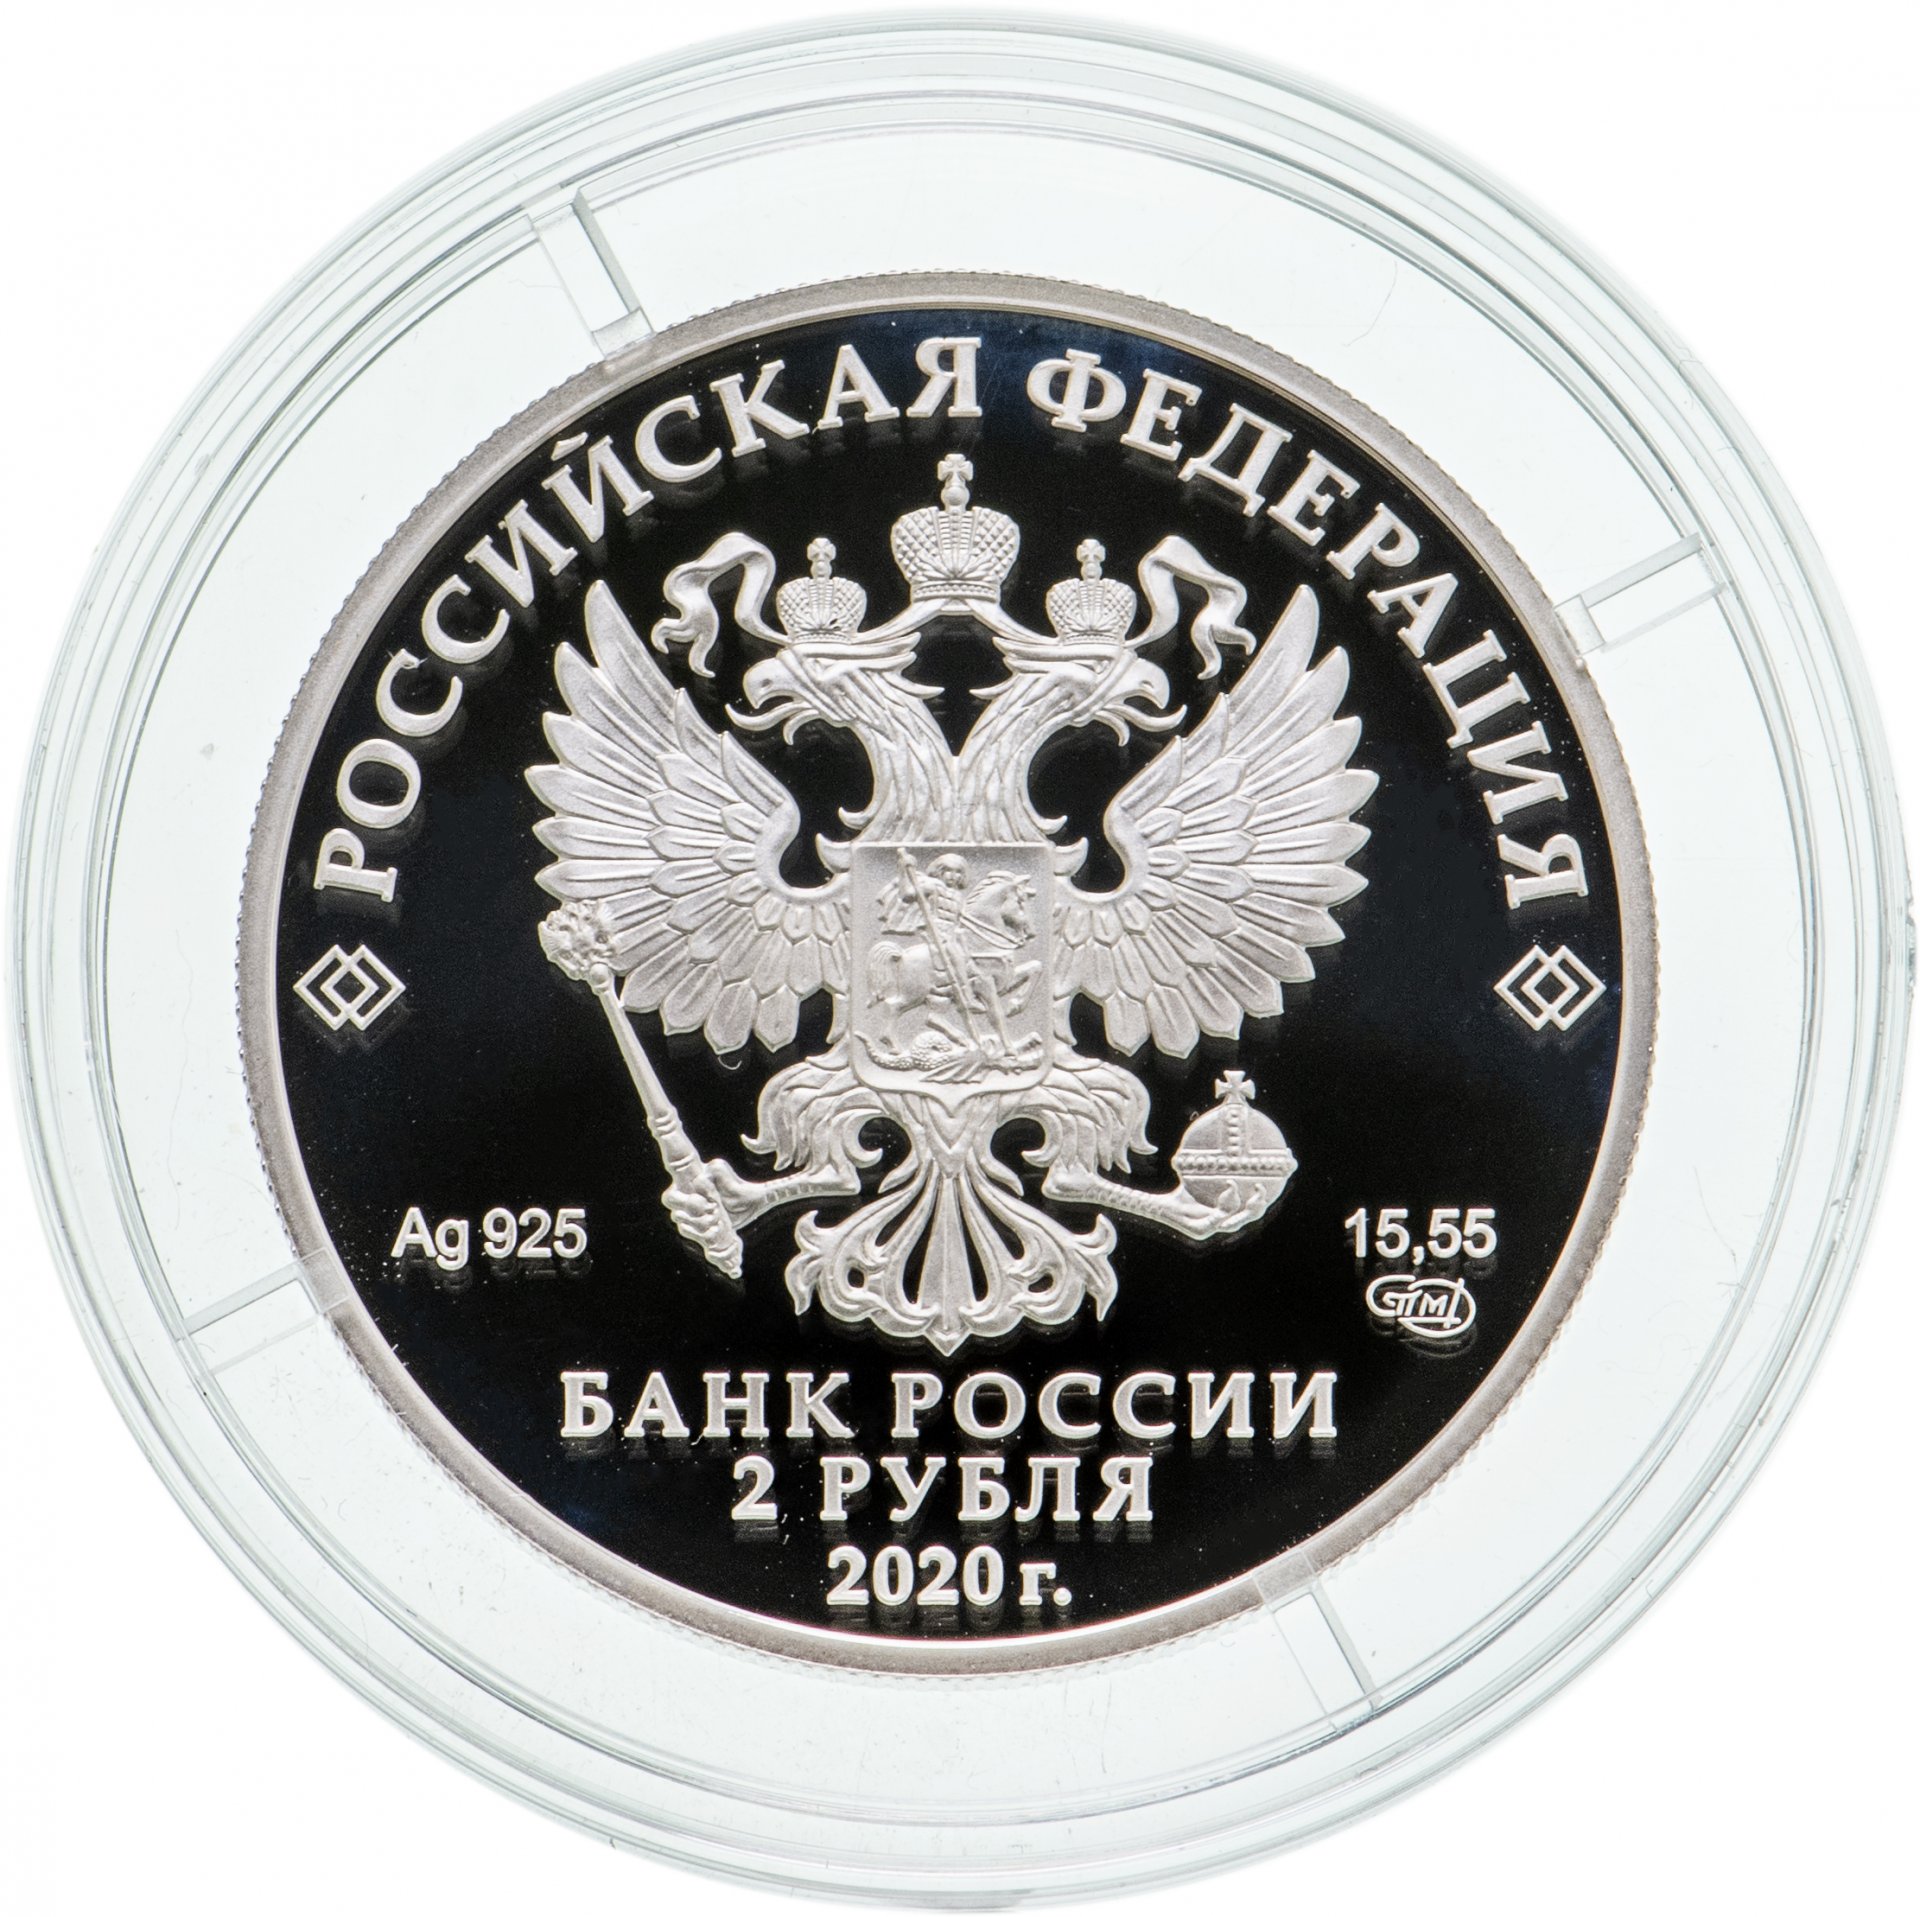 Россия серебро сегодня. Монета РФ 1 рубль 2020 года. 3 Рубля 2016. Монета РФ 1 рубль 2017 года. Банк России 2 рубля 2020.